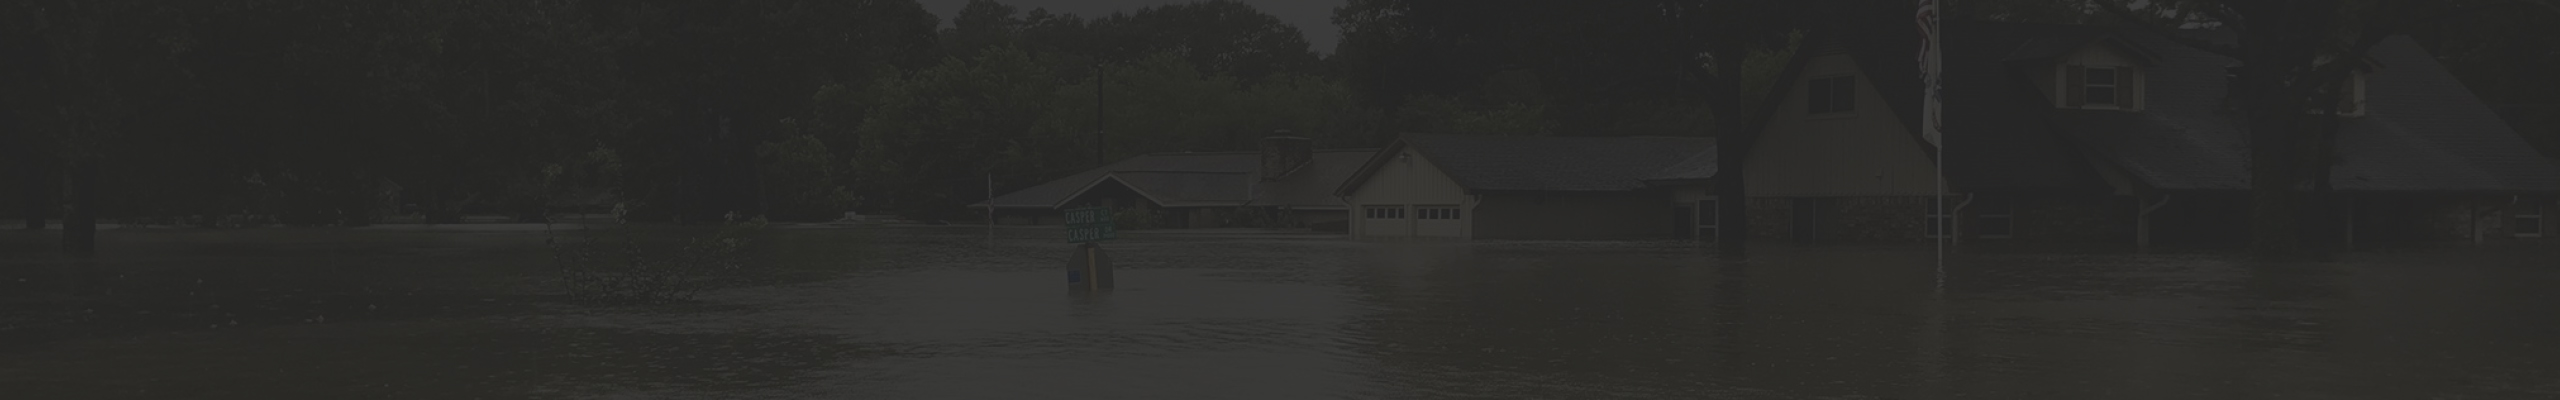 Public Adjusters Associates - Residential Flood Damage Image 1